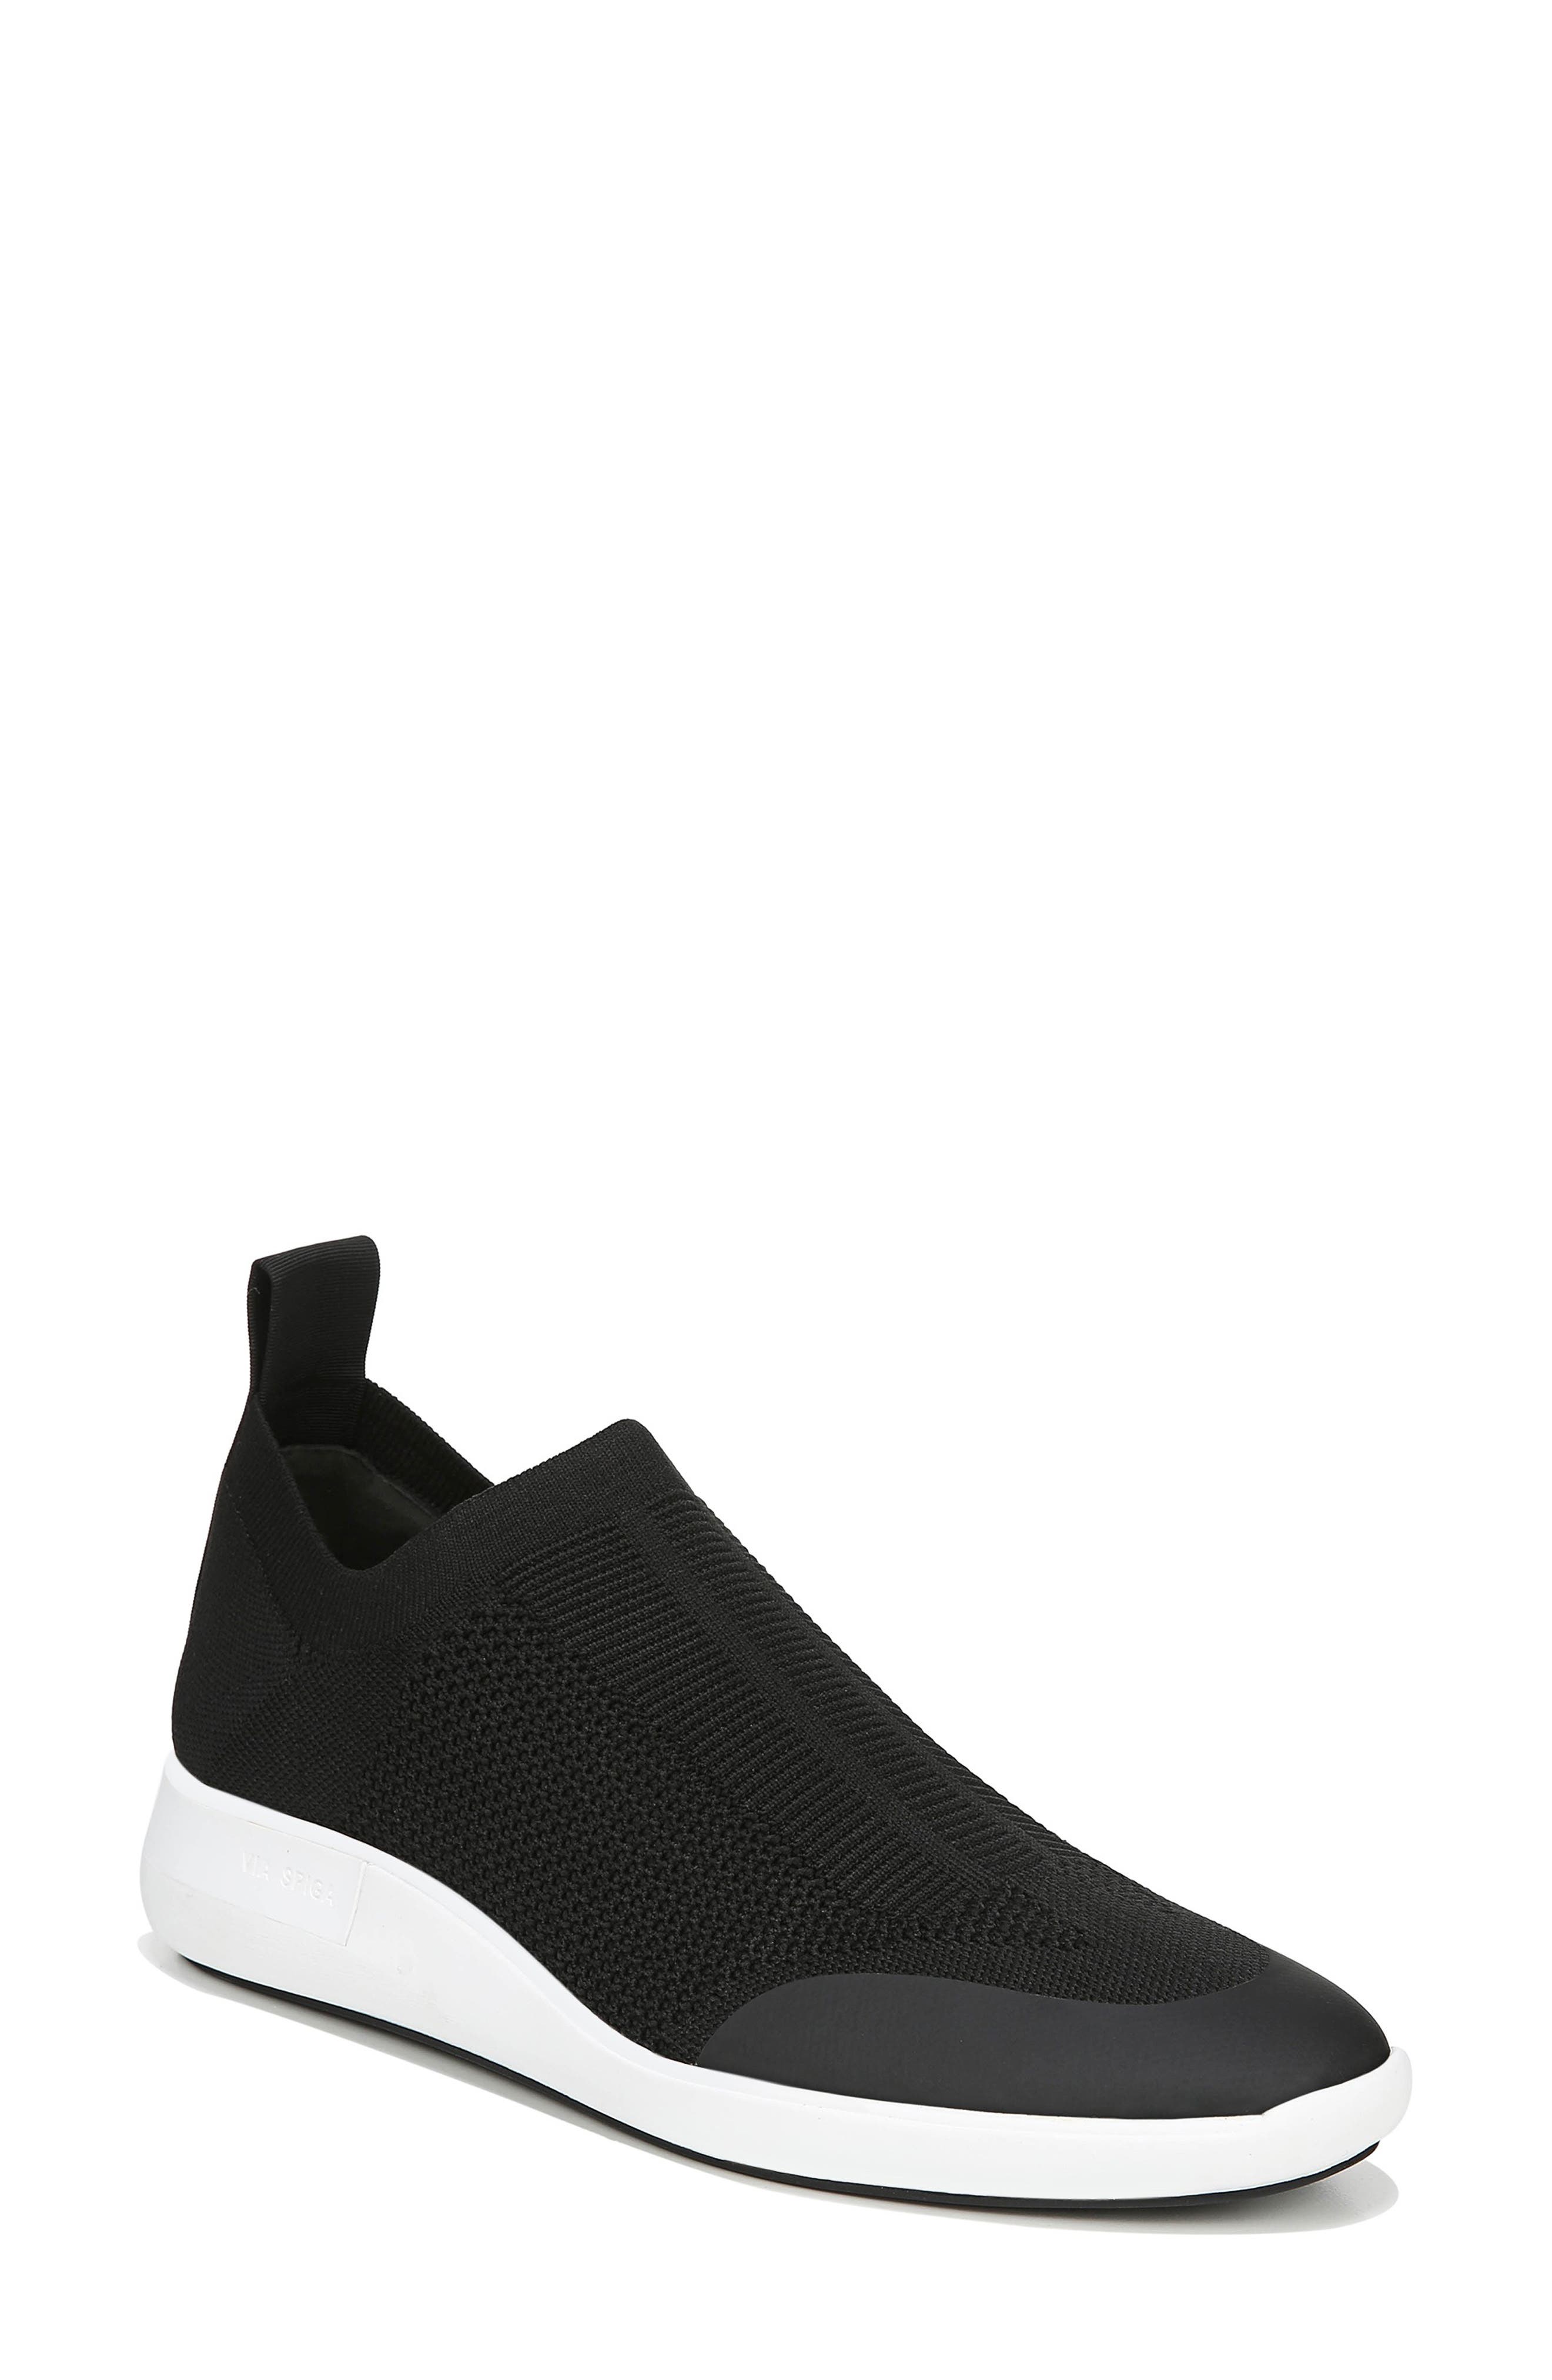 Via Spiga | Marlow 5 Wedge Sock Sneaker 